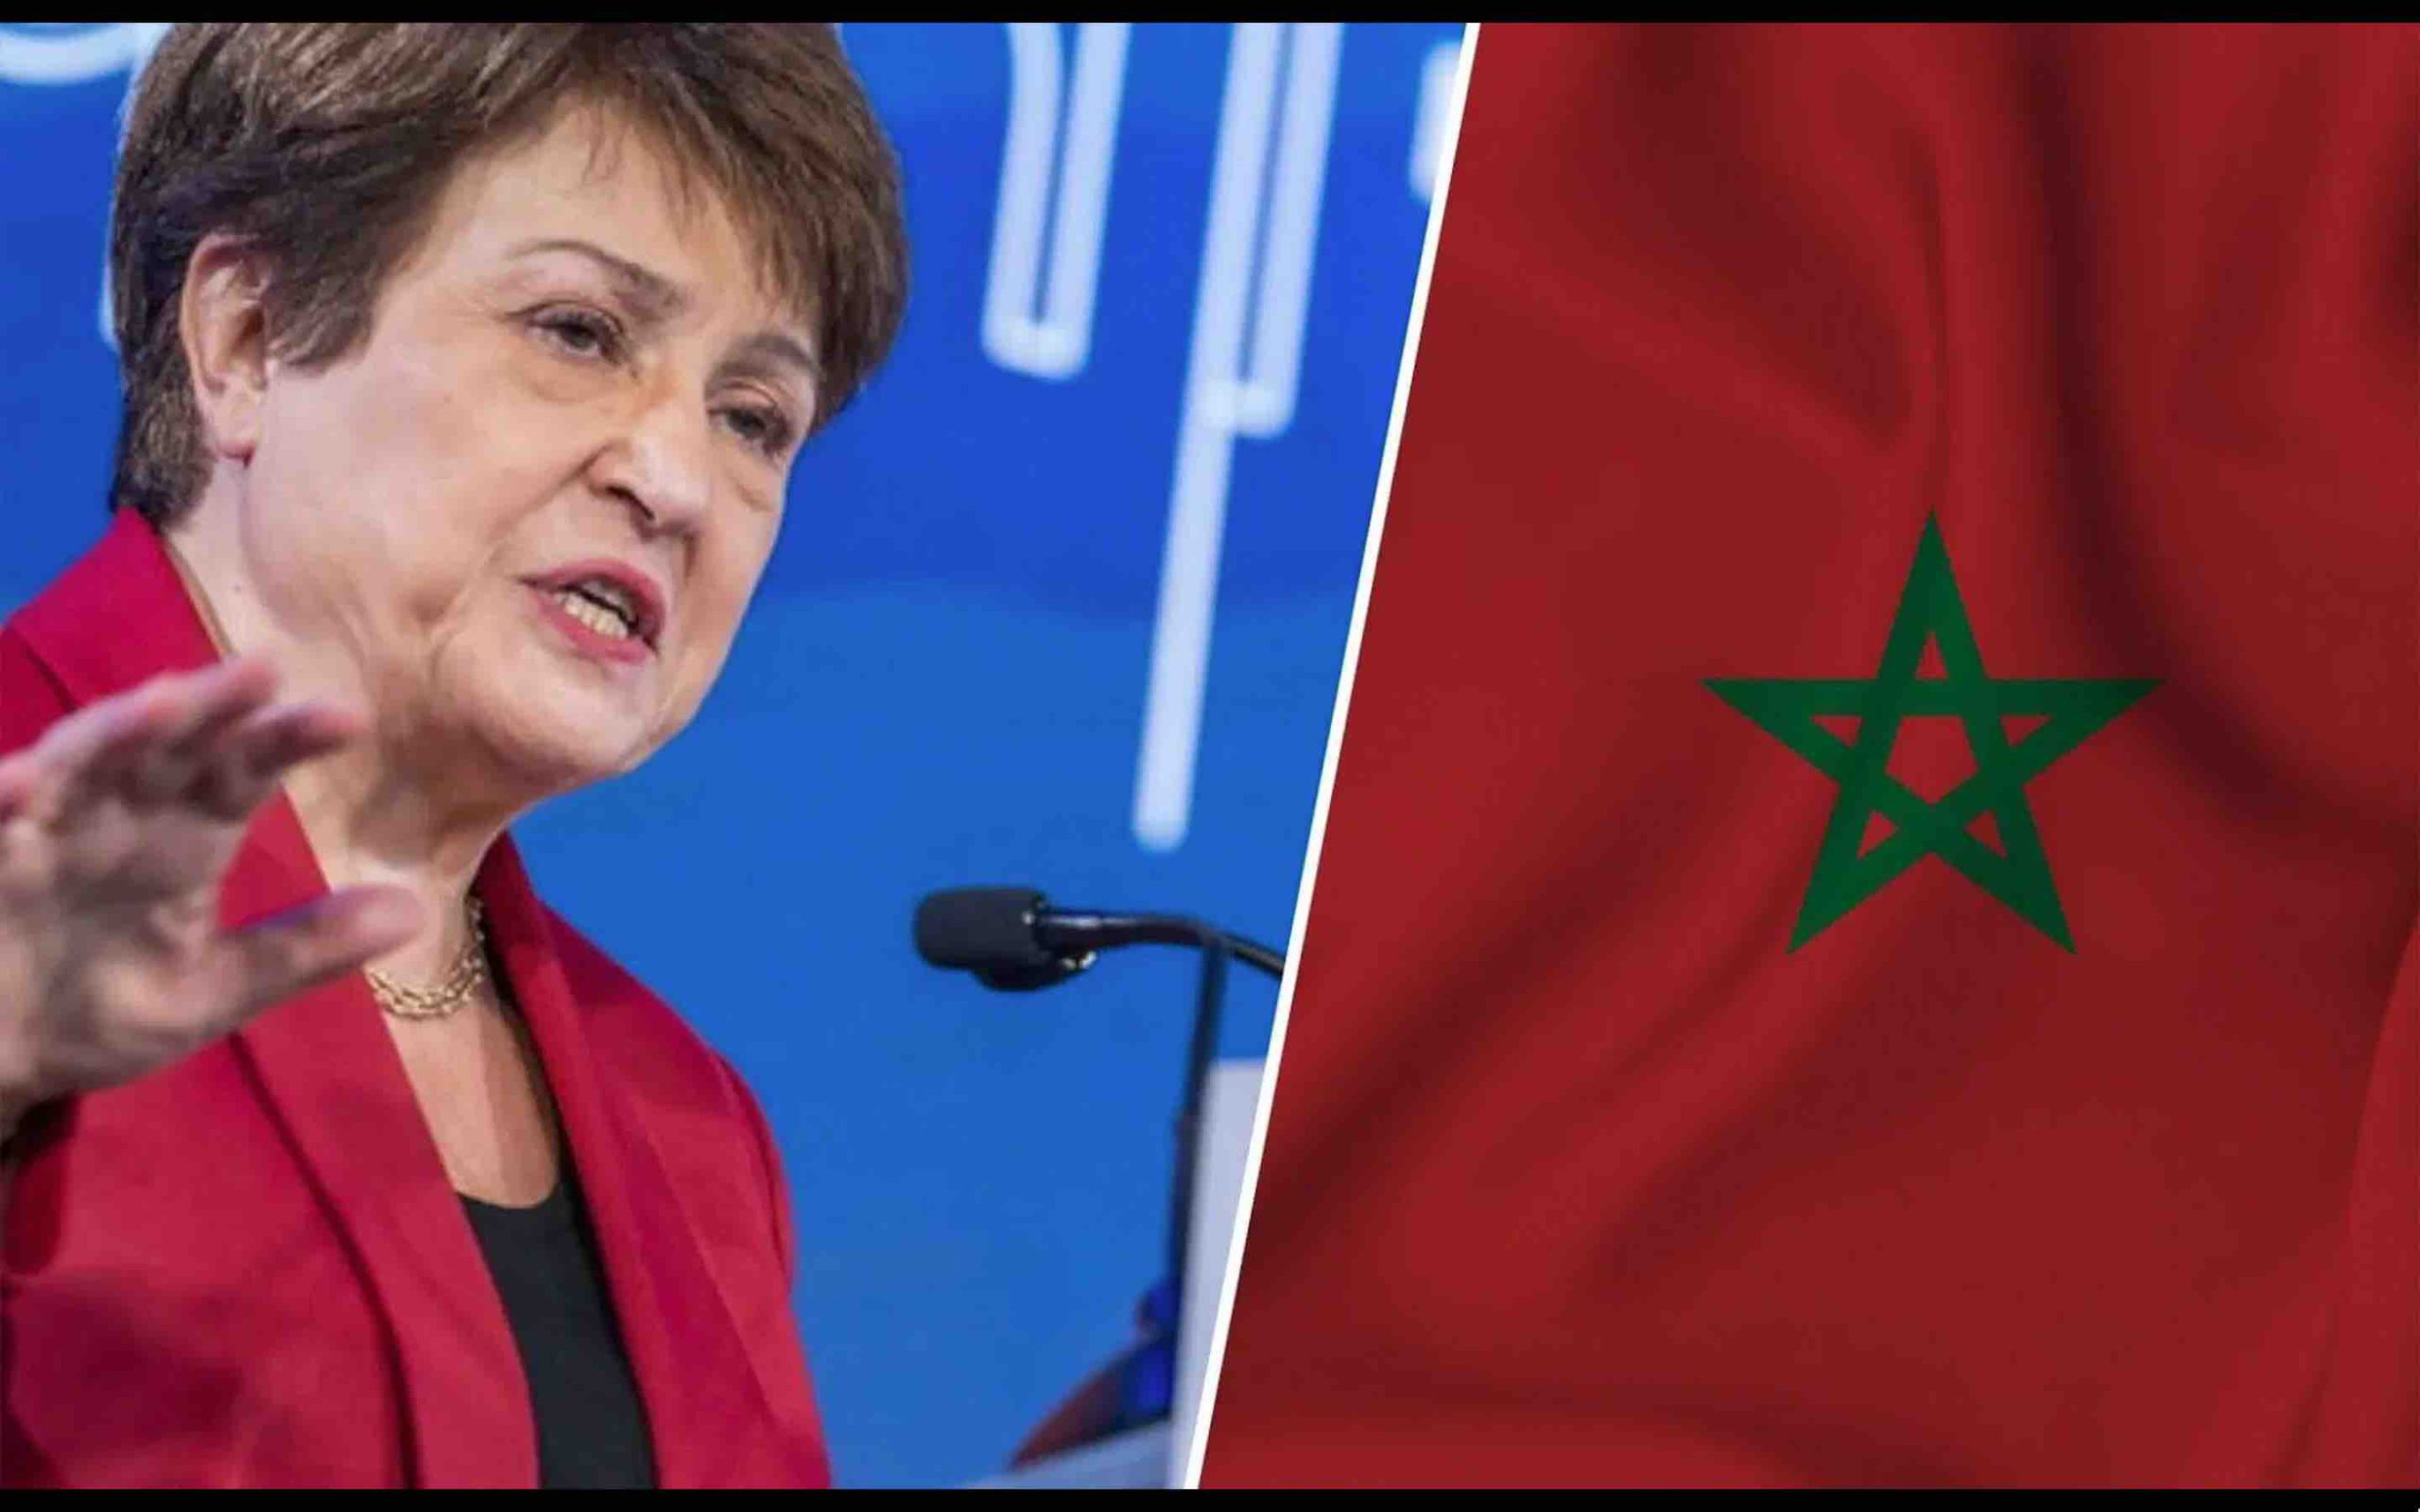 Kristalina Georgieva FMI seisme Maroc Morocco earthquake